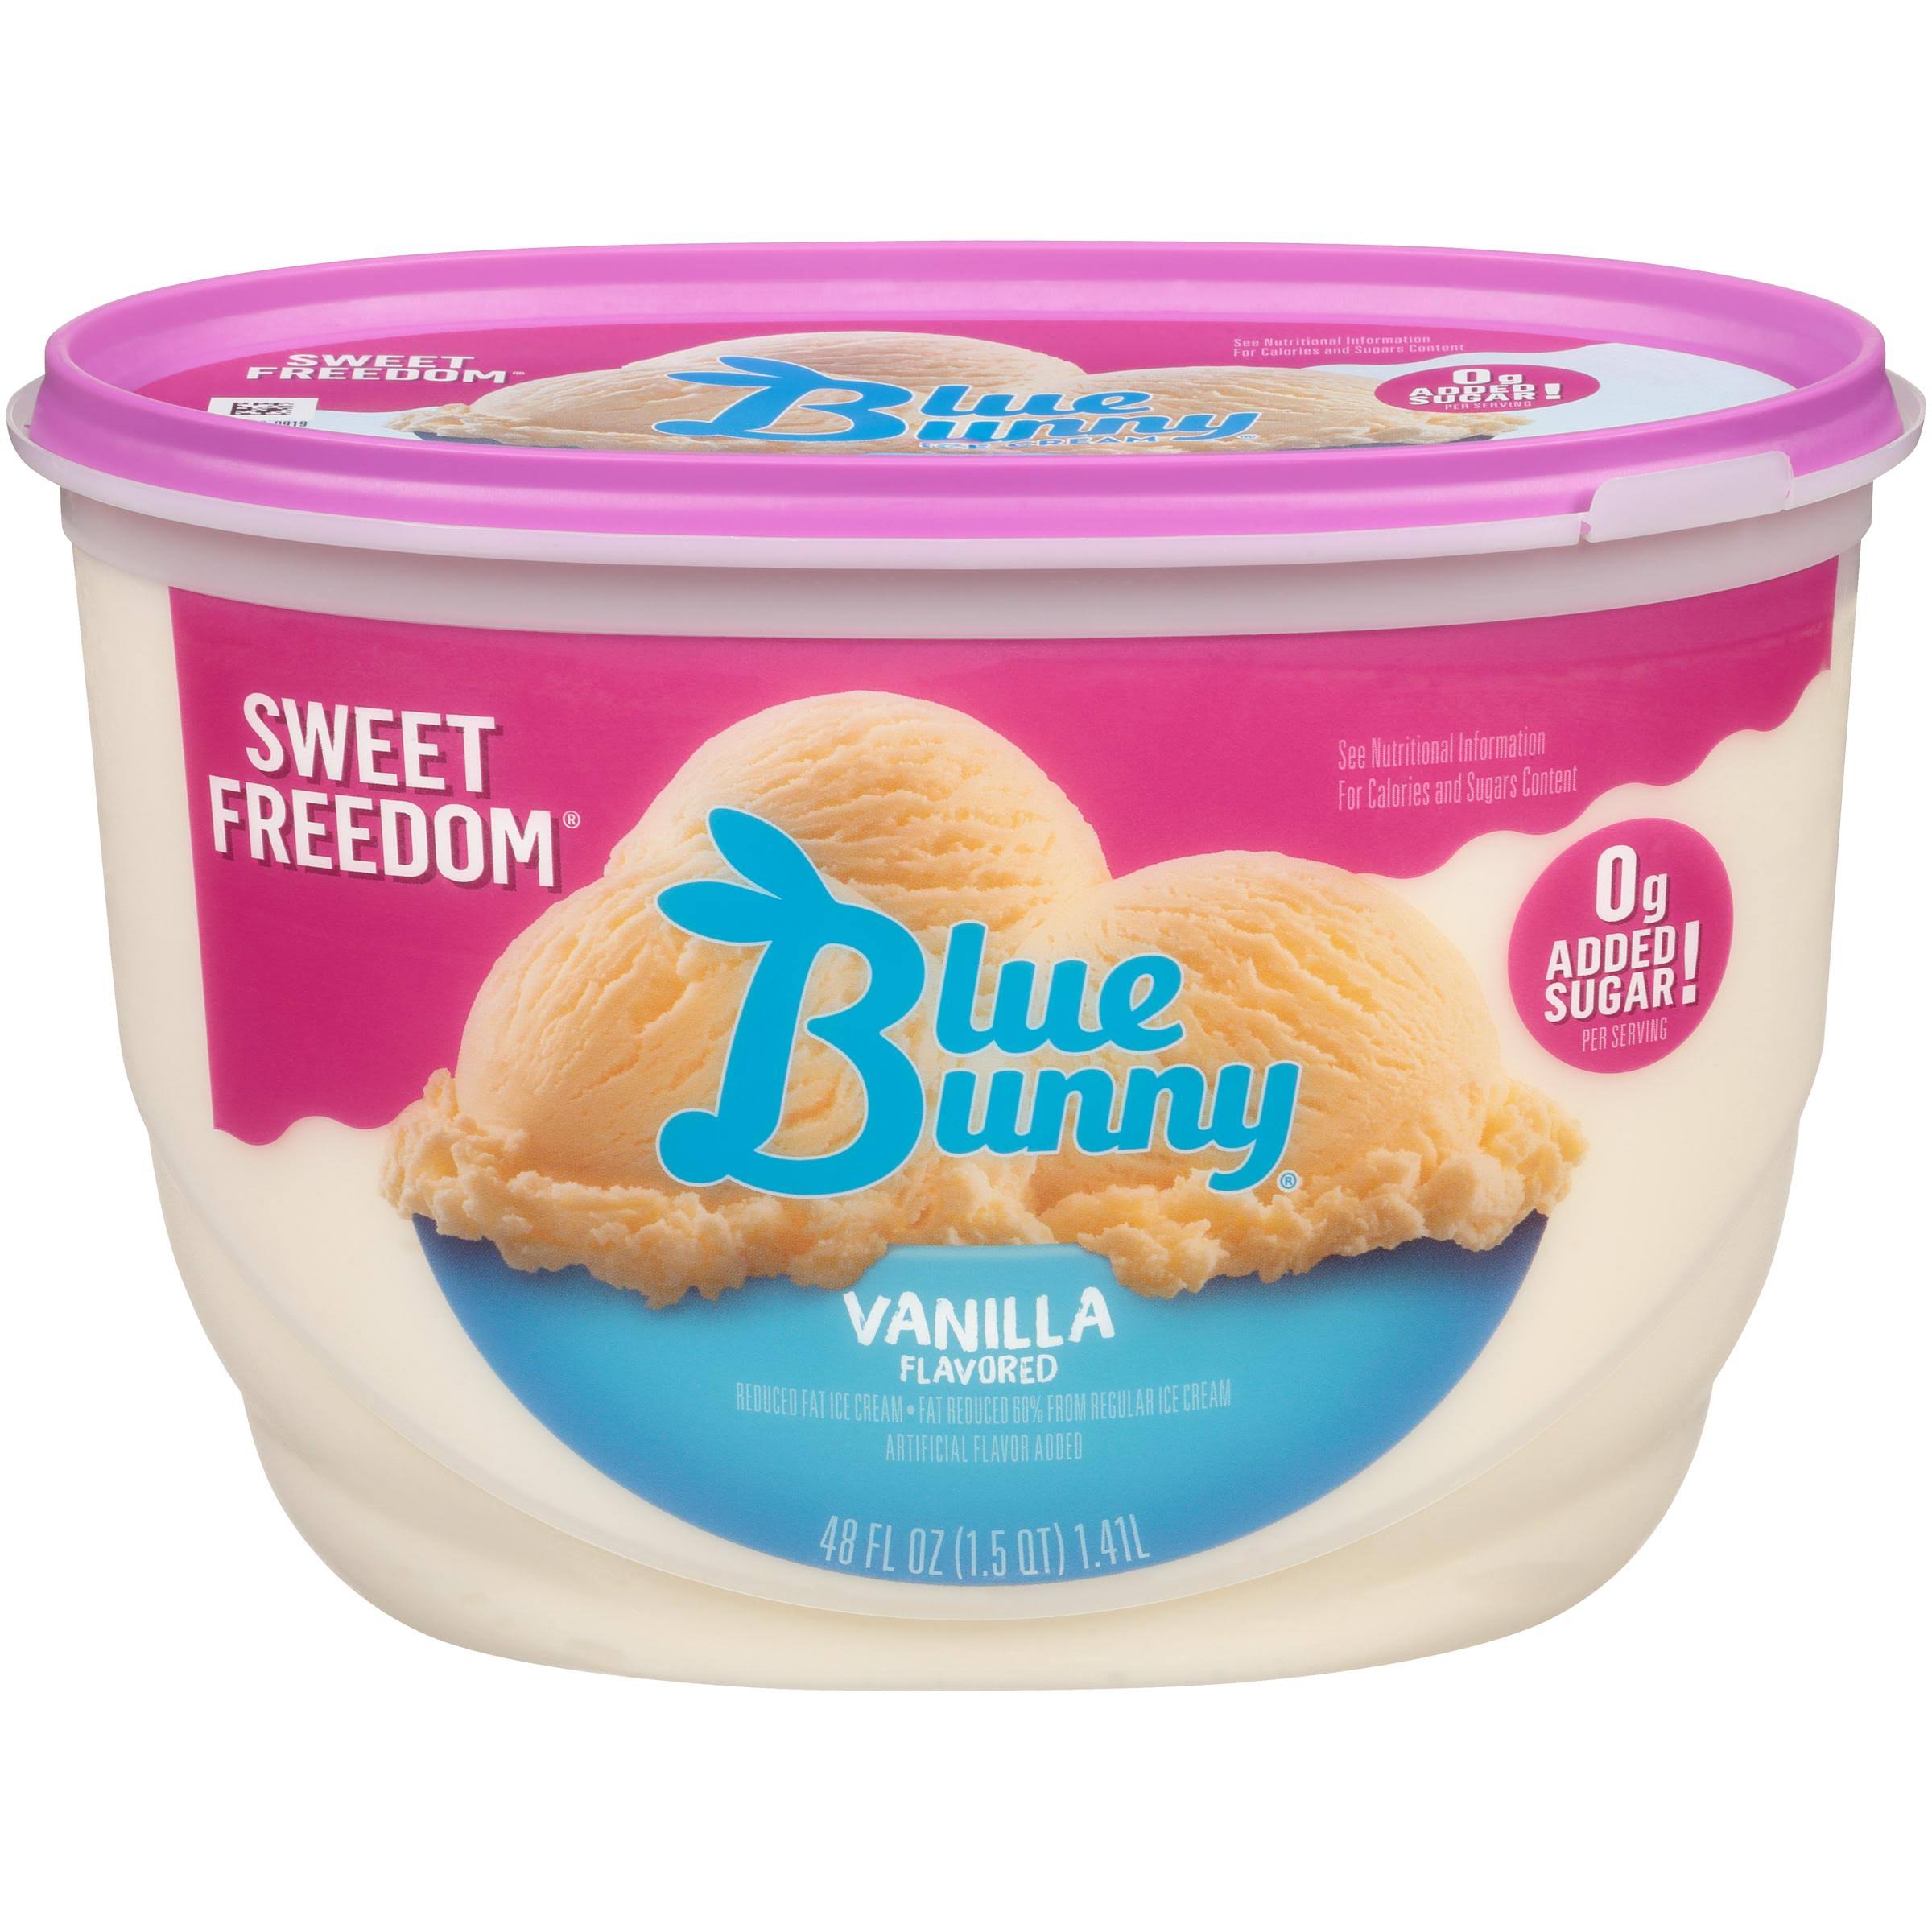 Blue Bunny Sweet Freedom Ice Cream - Vanilla, 48oz